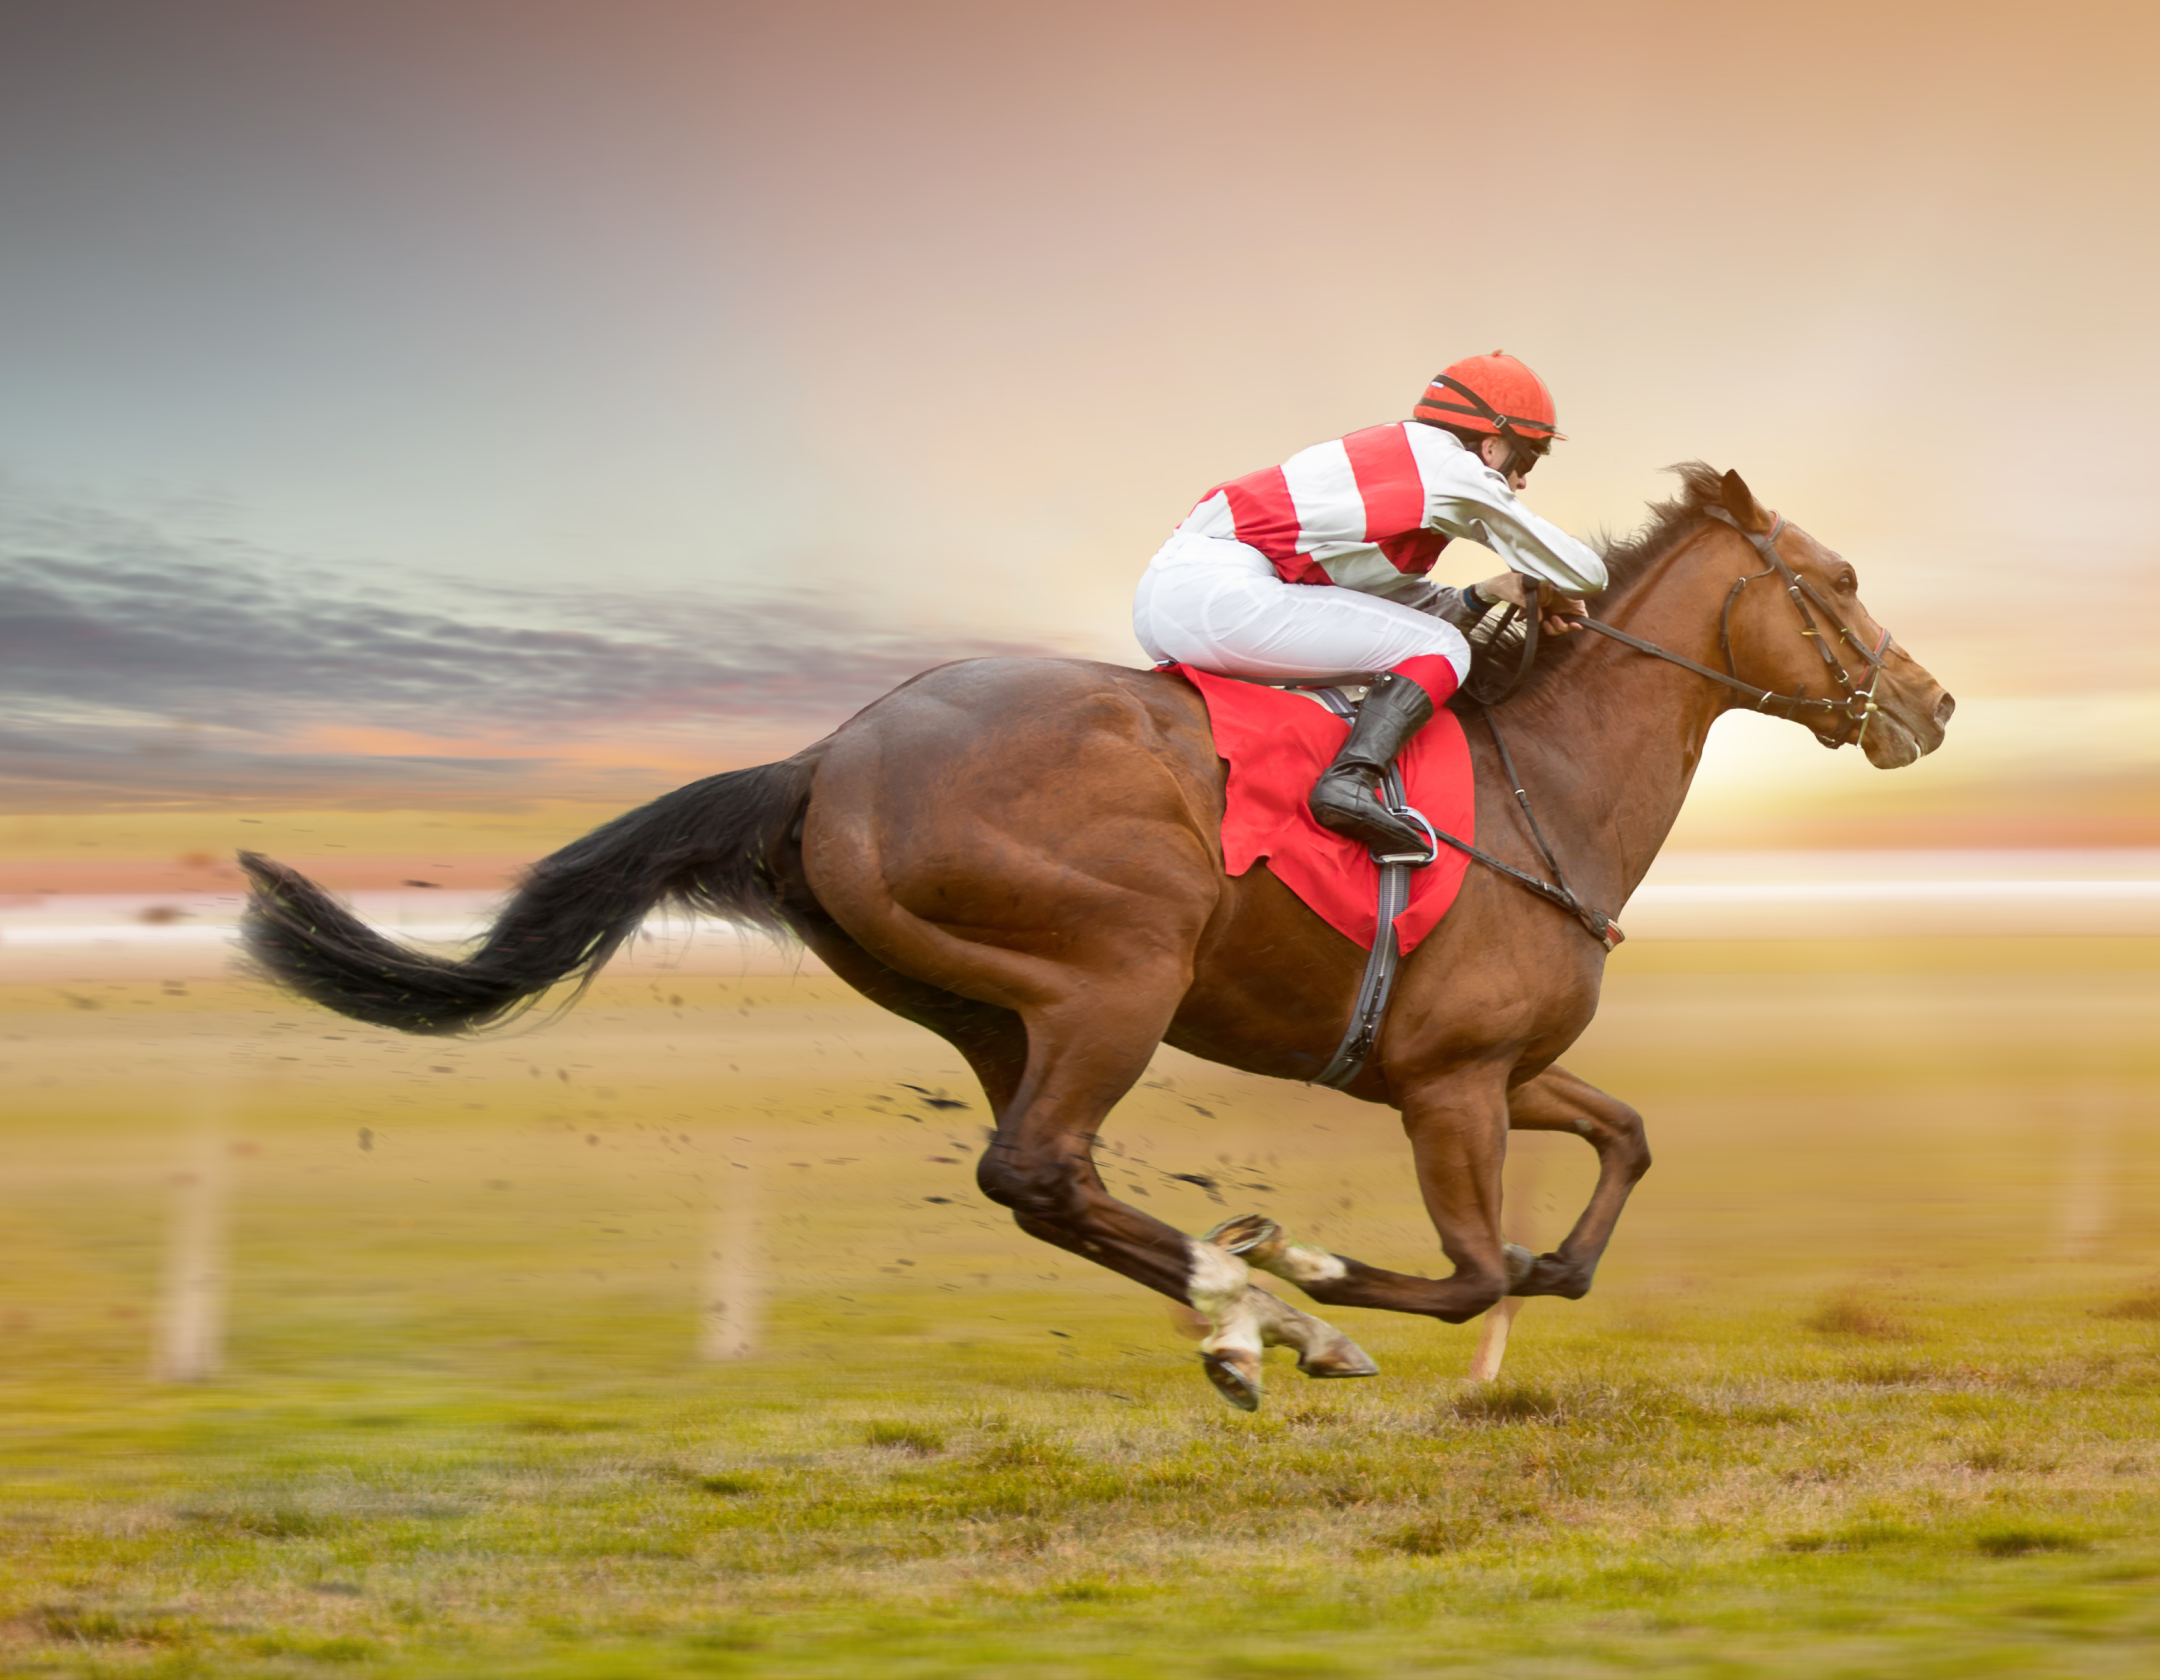 Jockey racing a horse on track.